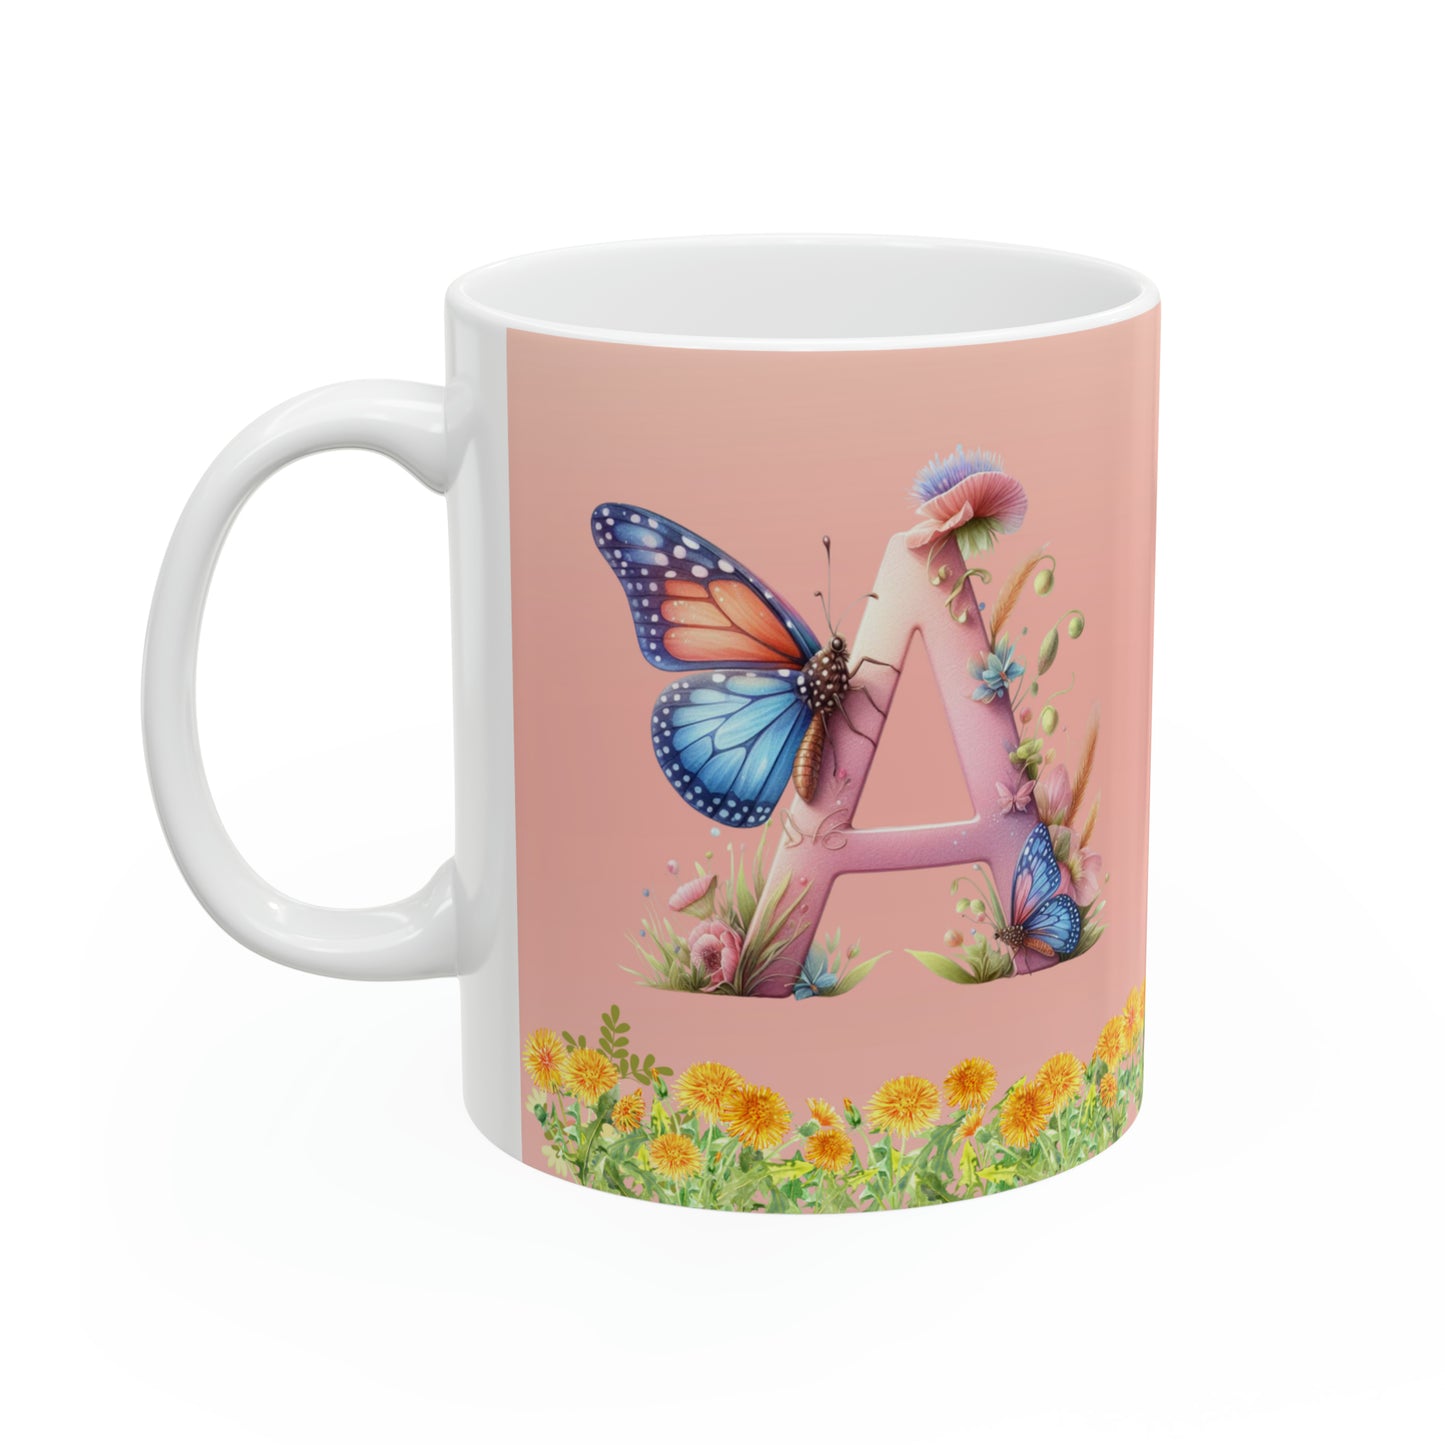 Fluttering into Spring: Adorable Butterfly Letter A - Spring Mug